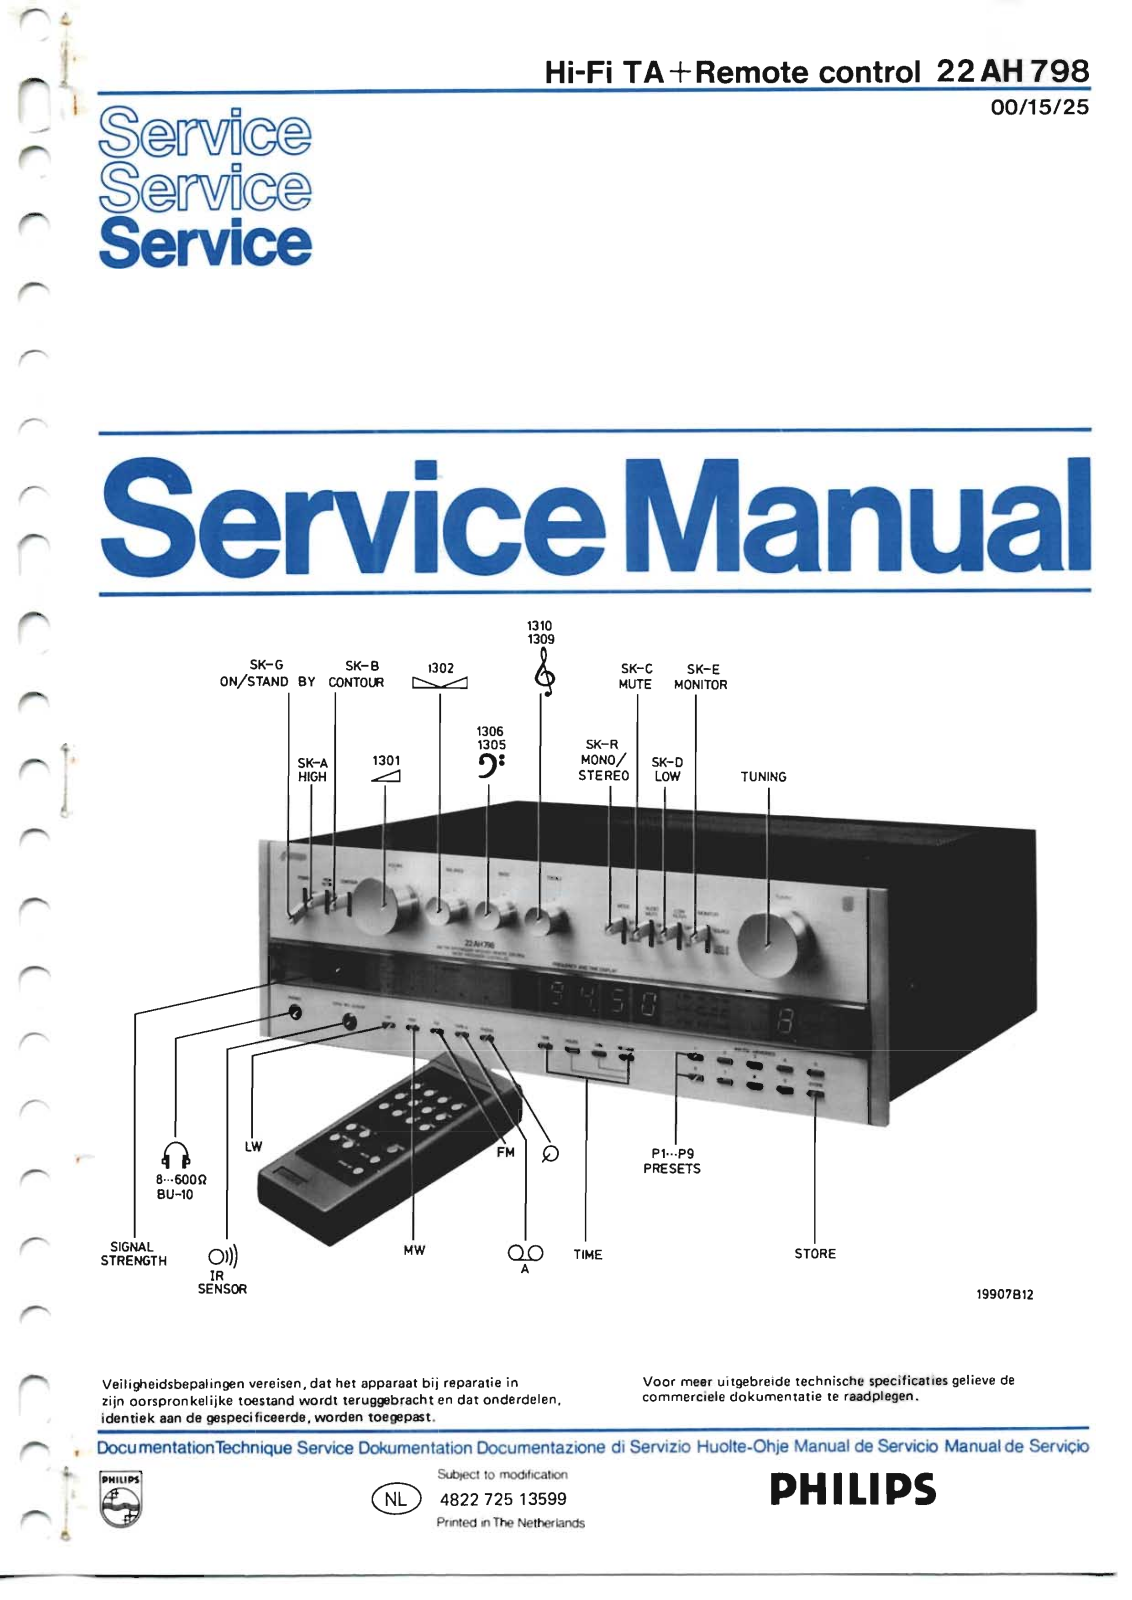 Philips 22-AH-798 Service Manual